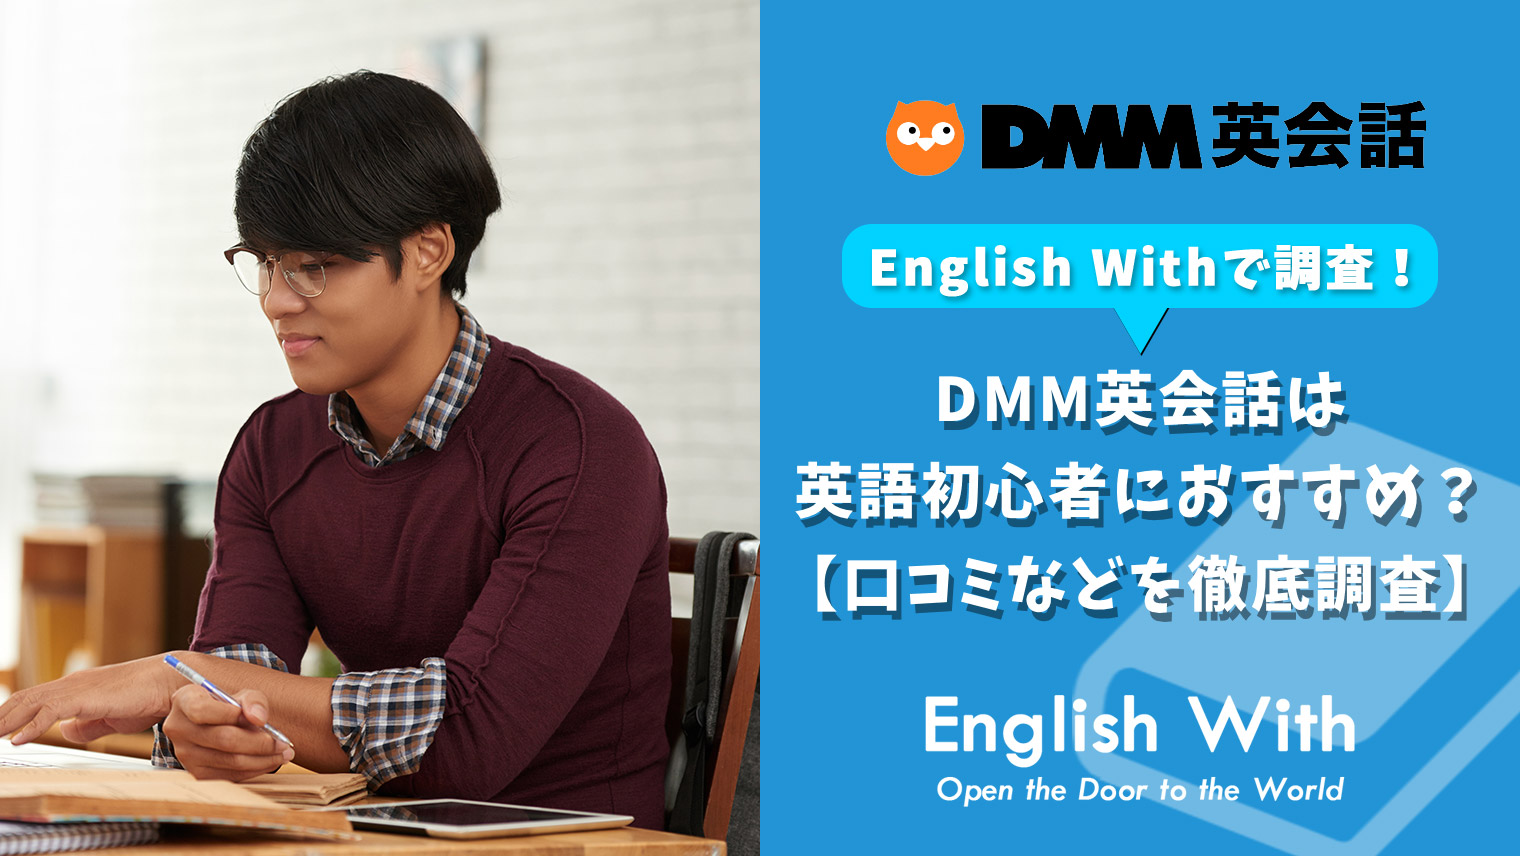 Dmm英会話は英語初心者におすすめか 口コミなどを徹底調査 おすすめ英会話 英語学習の比較 ランキング English With